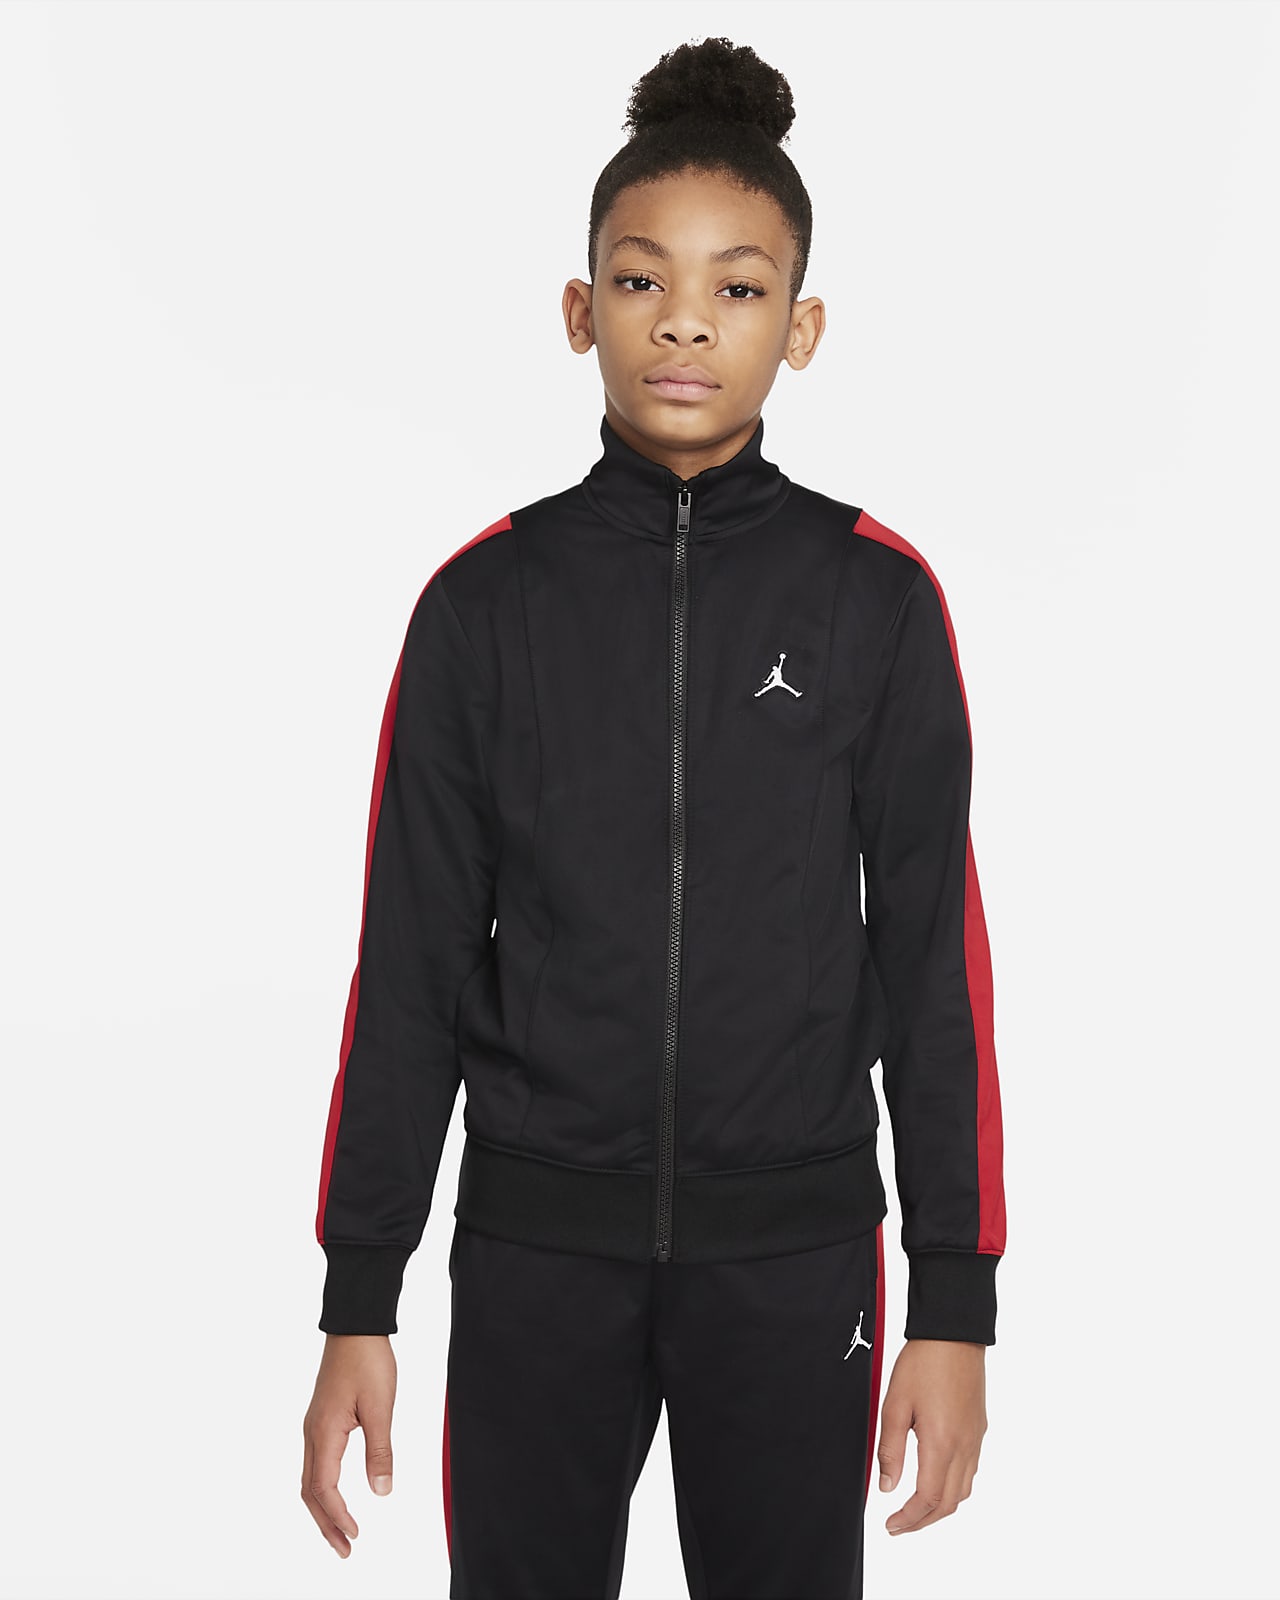 Jordan Big Kids' Full-Zip Jacket